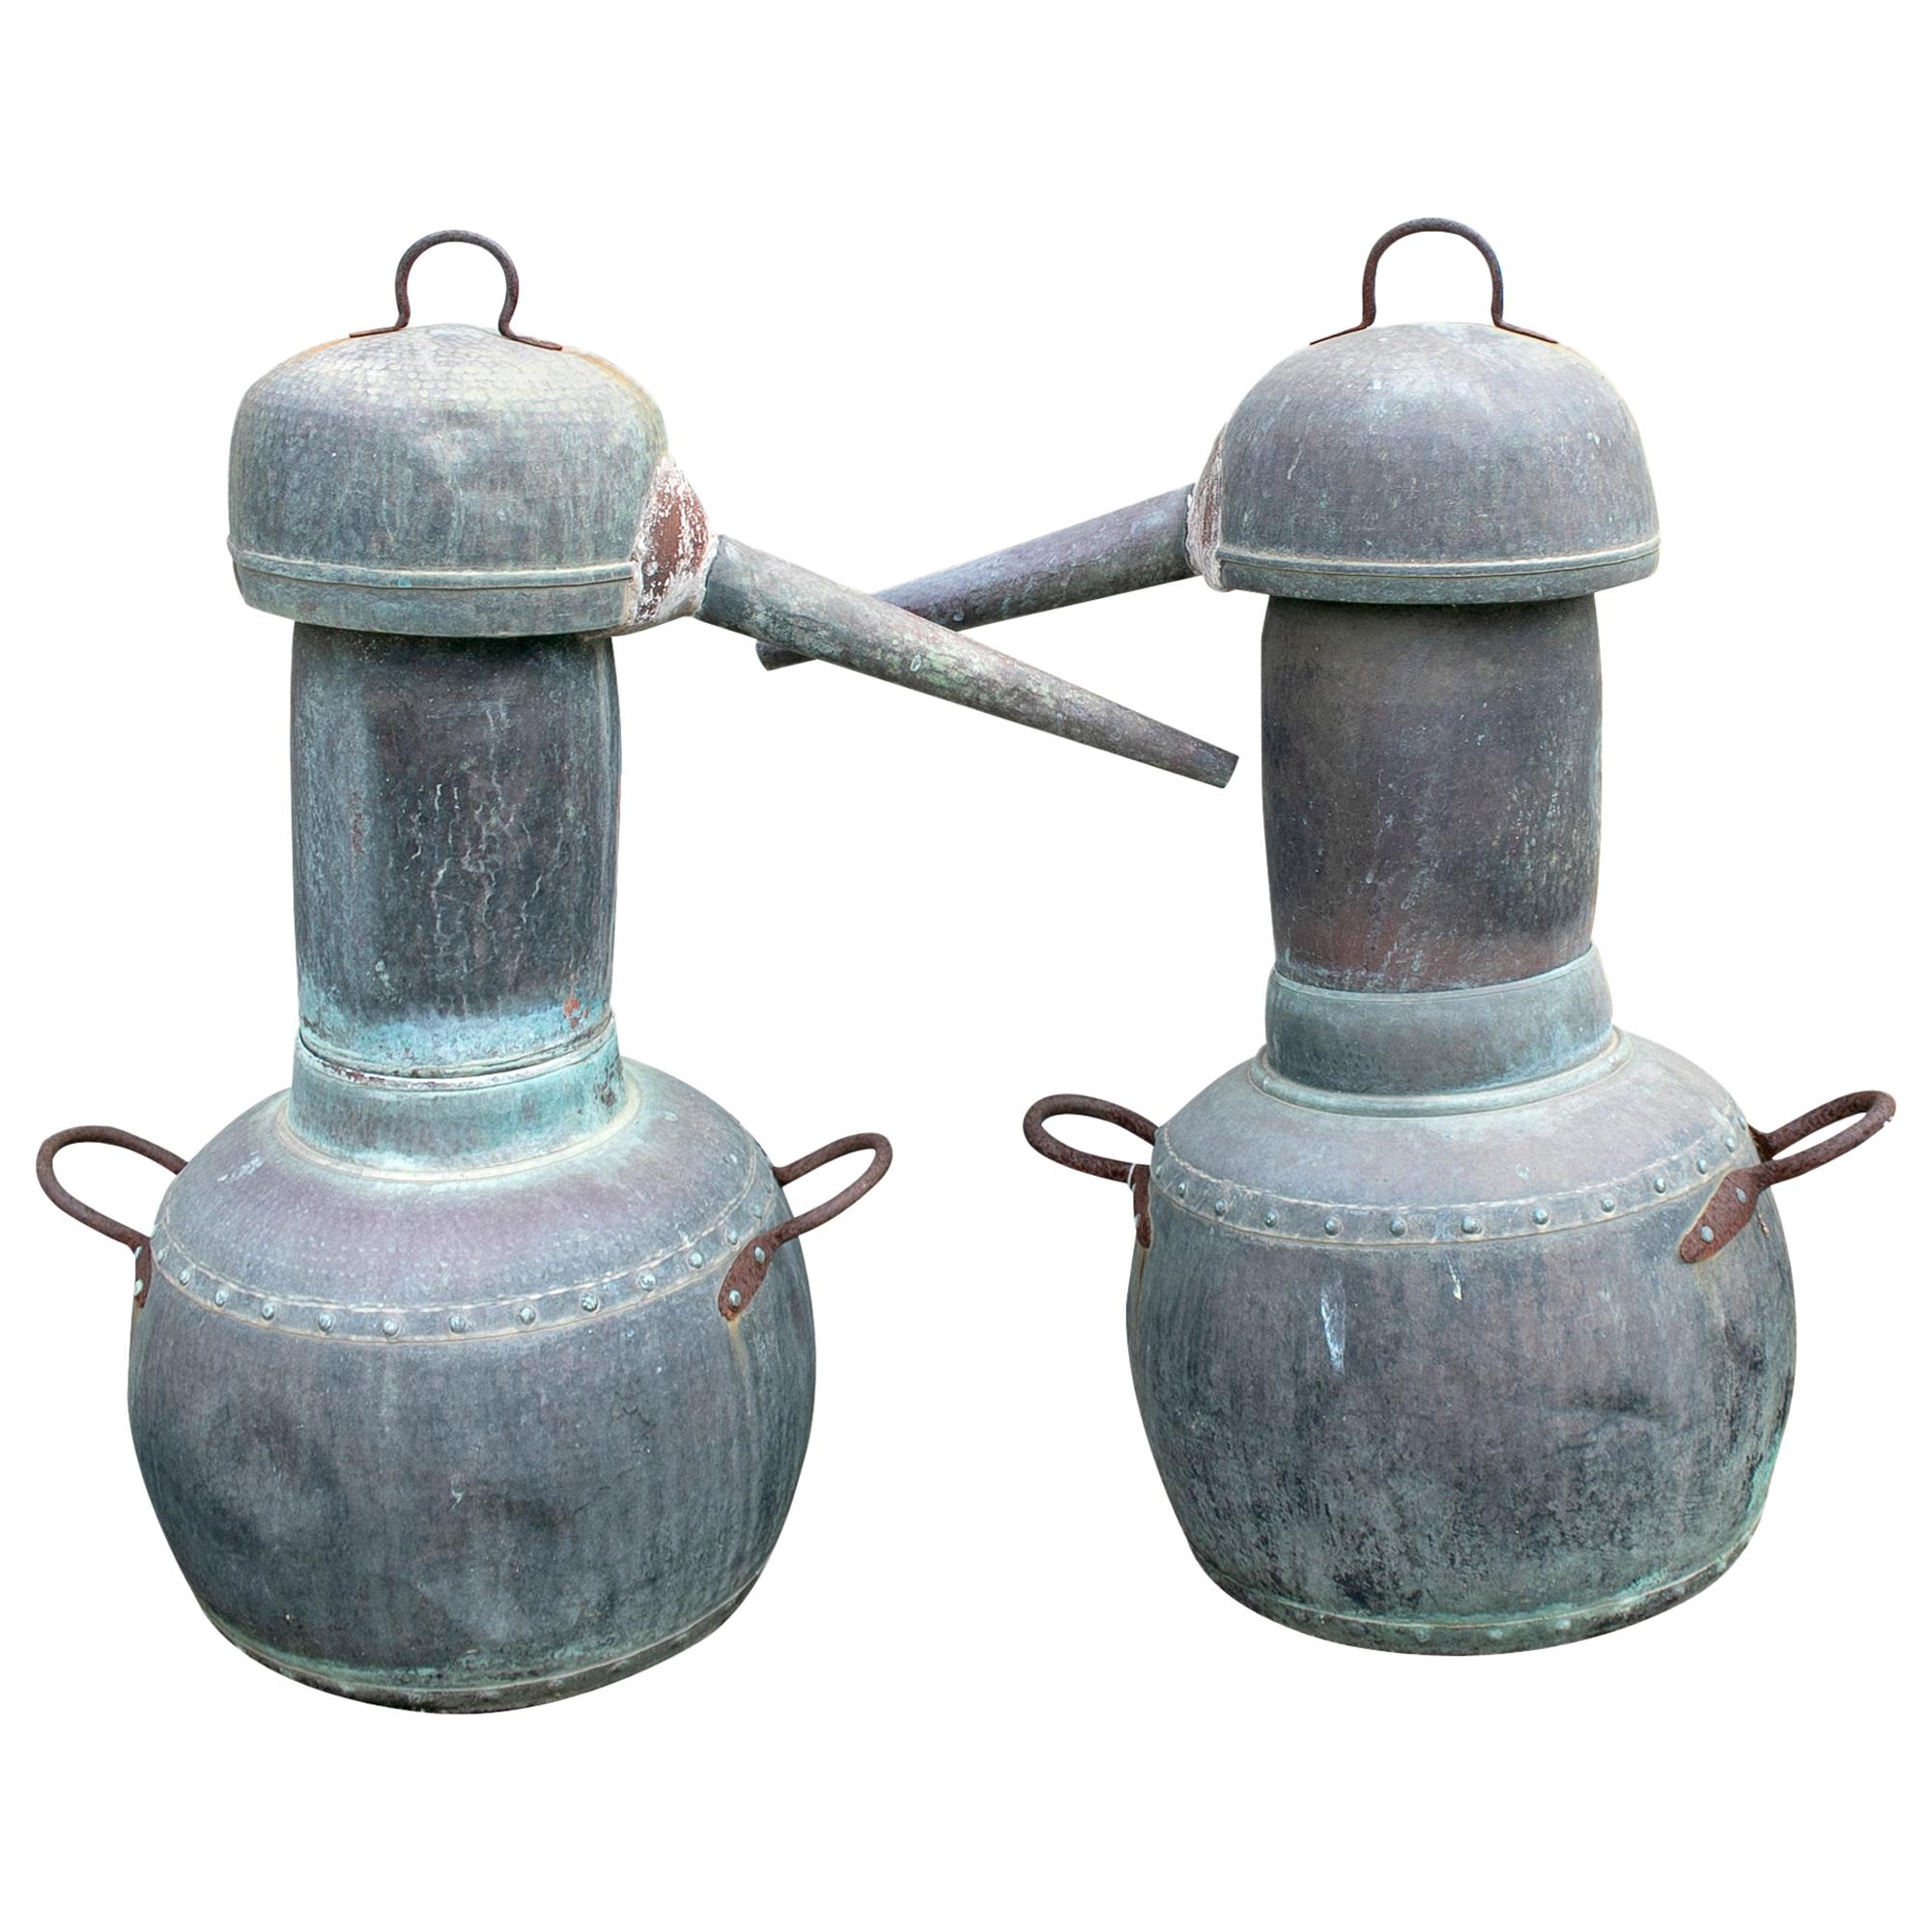 19th Century Pair of Spanish Galician Copper Spirit Stills For Sale